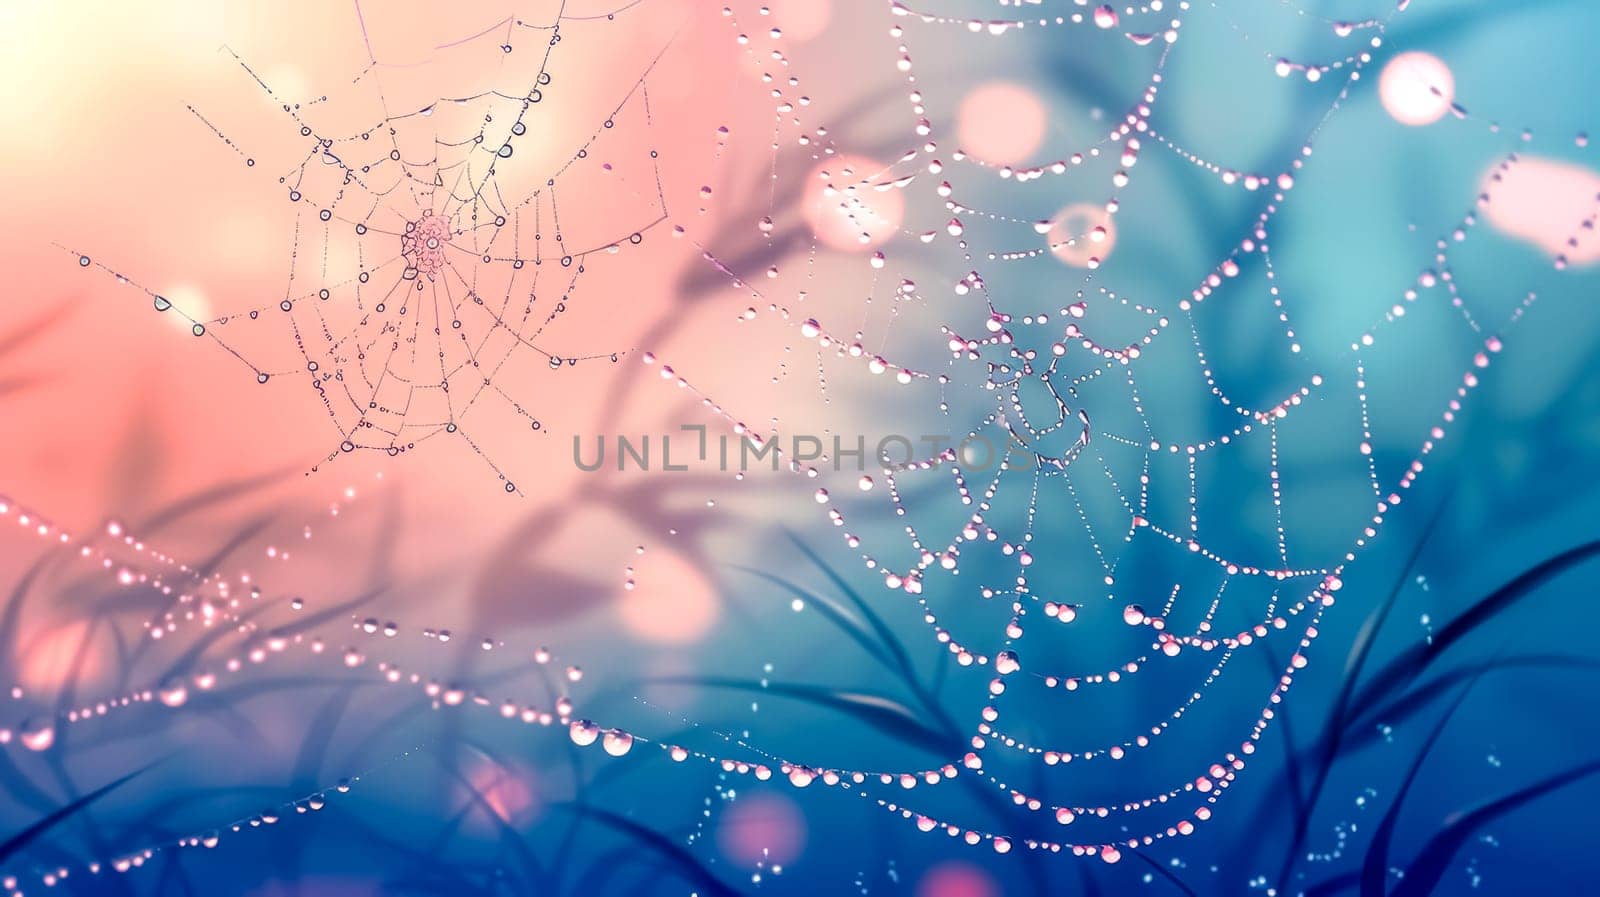 Dew-adorned spider web at sunrise by Edophoto